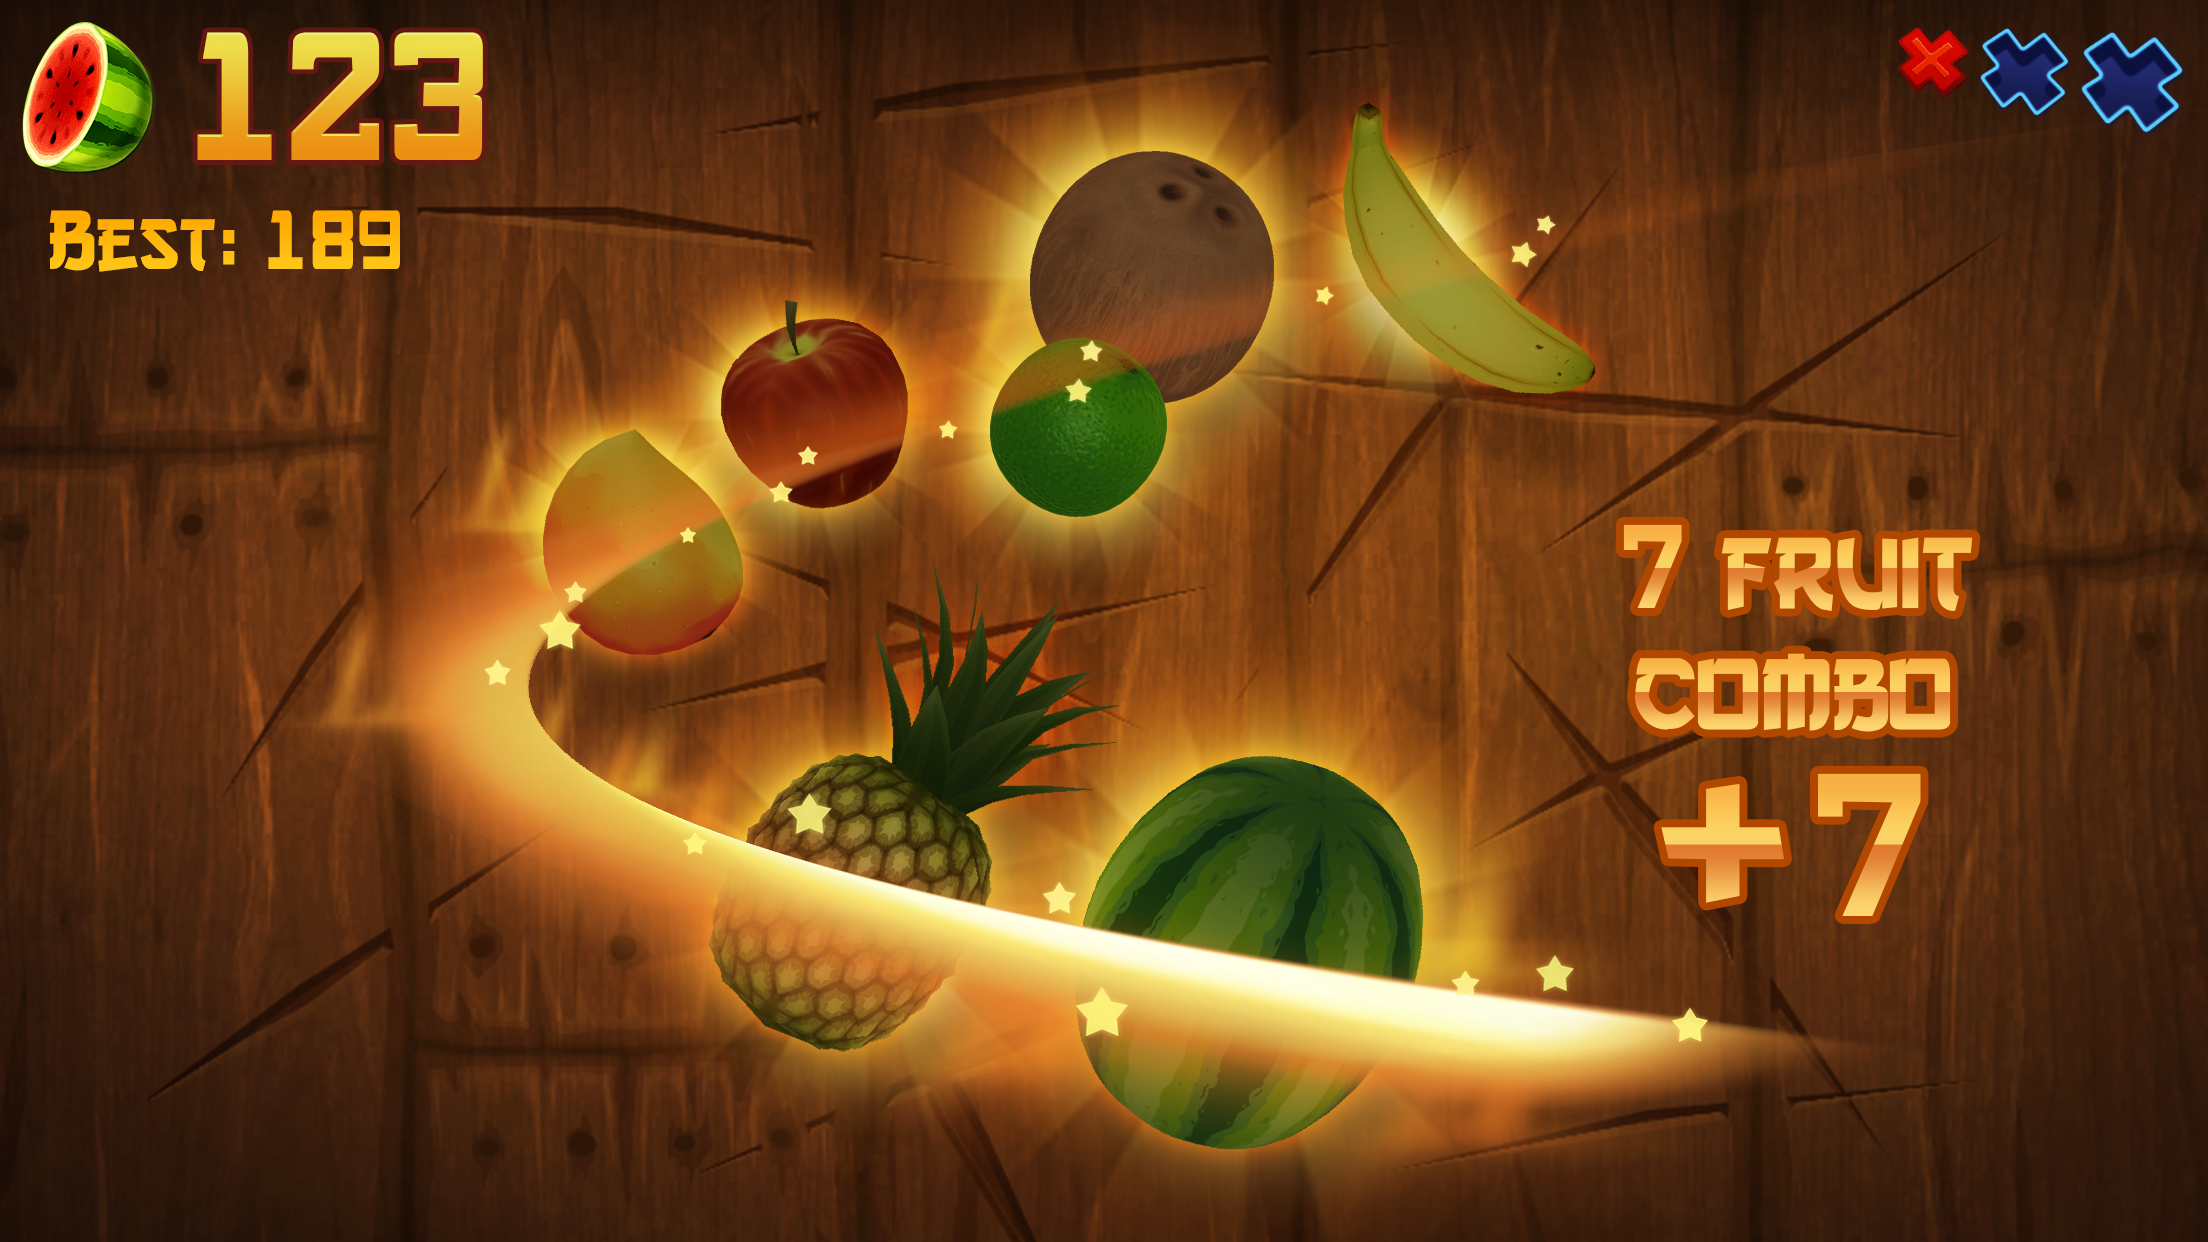 Download Fruit Ninja 2 - Fun Action Games APK